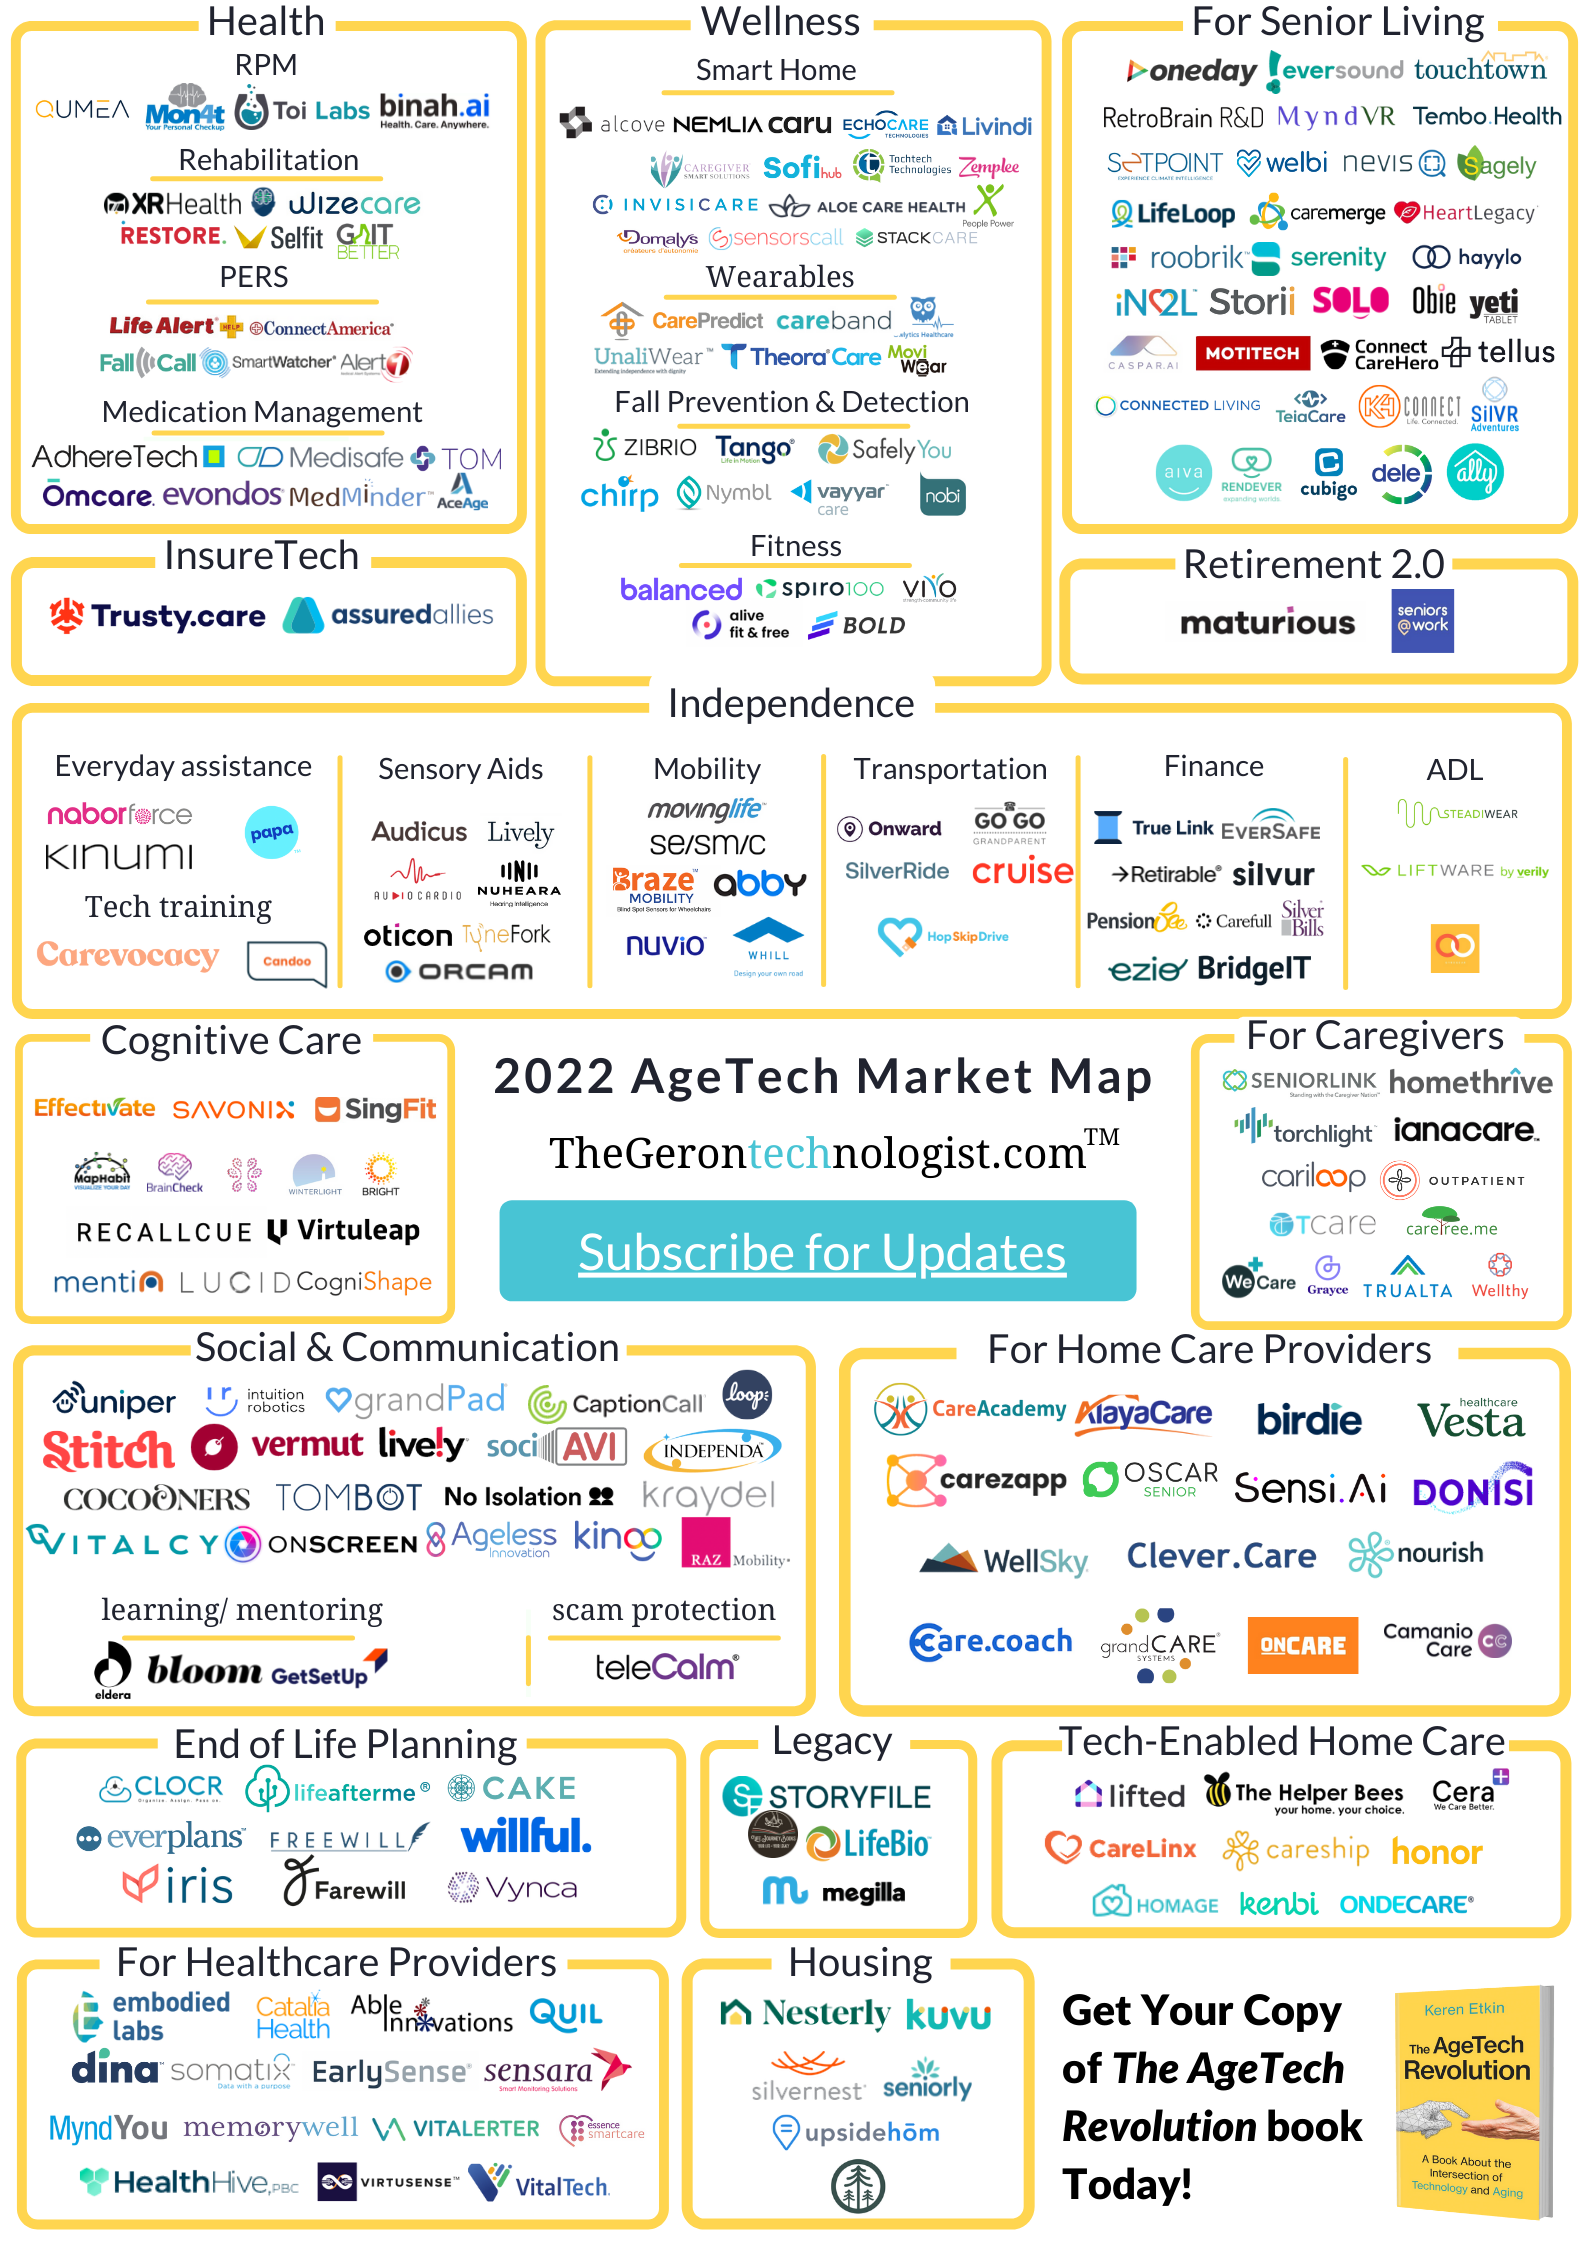 Thumbnail of 2022 AgeTech Market Map - TheGerontechnologist